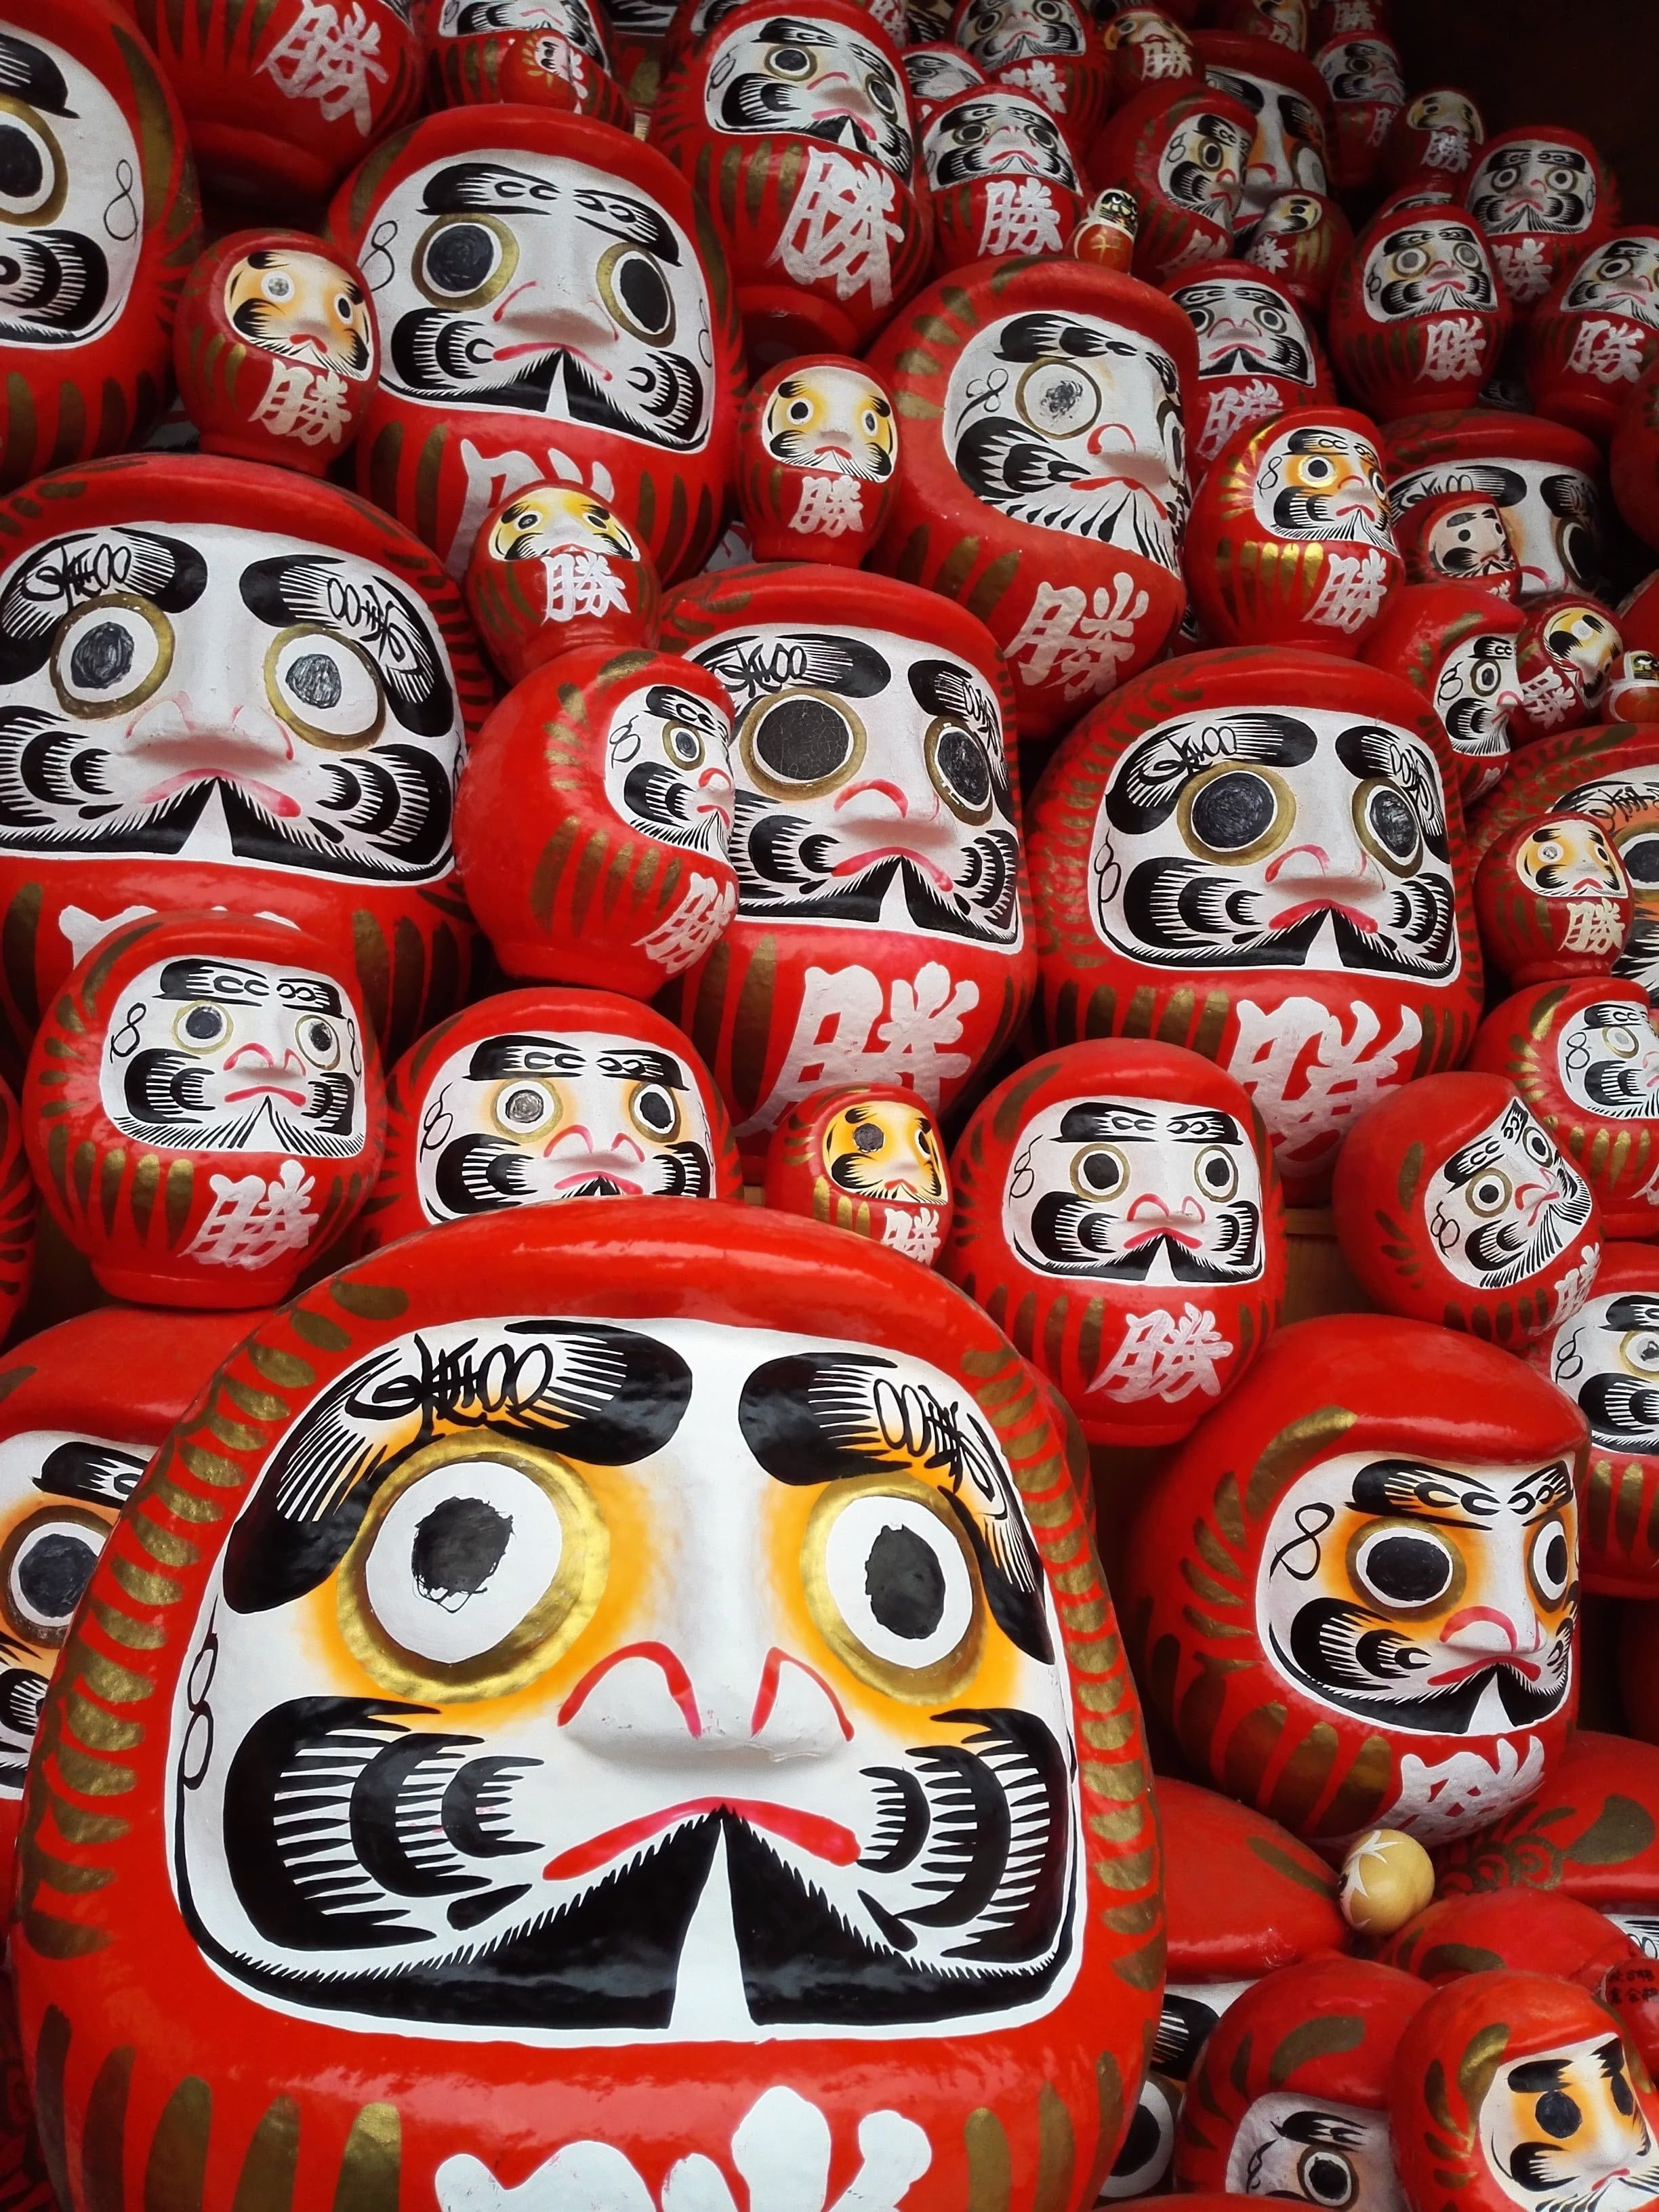 Stack Of White And Red Masks #dharma Daruma Doll Tumbling Doll #japan Mask Dis 4K. Daruma Doll, Daruma, Red Mask